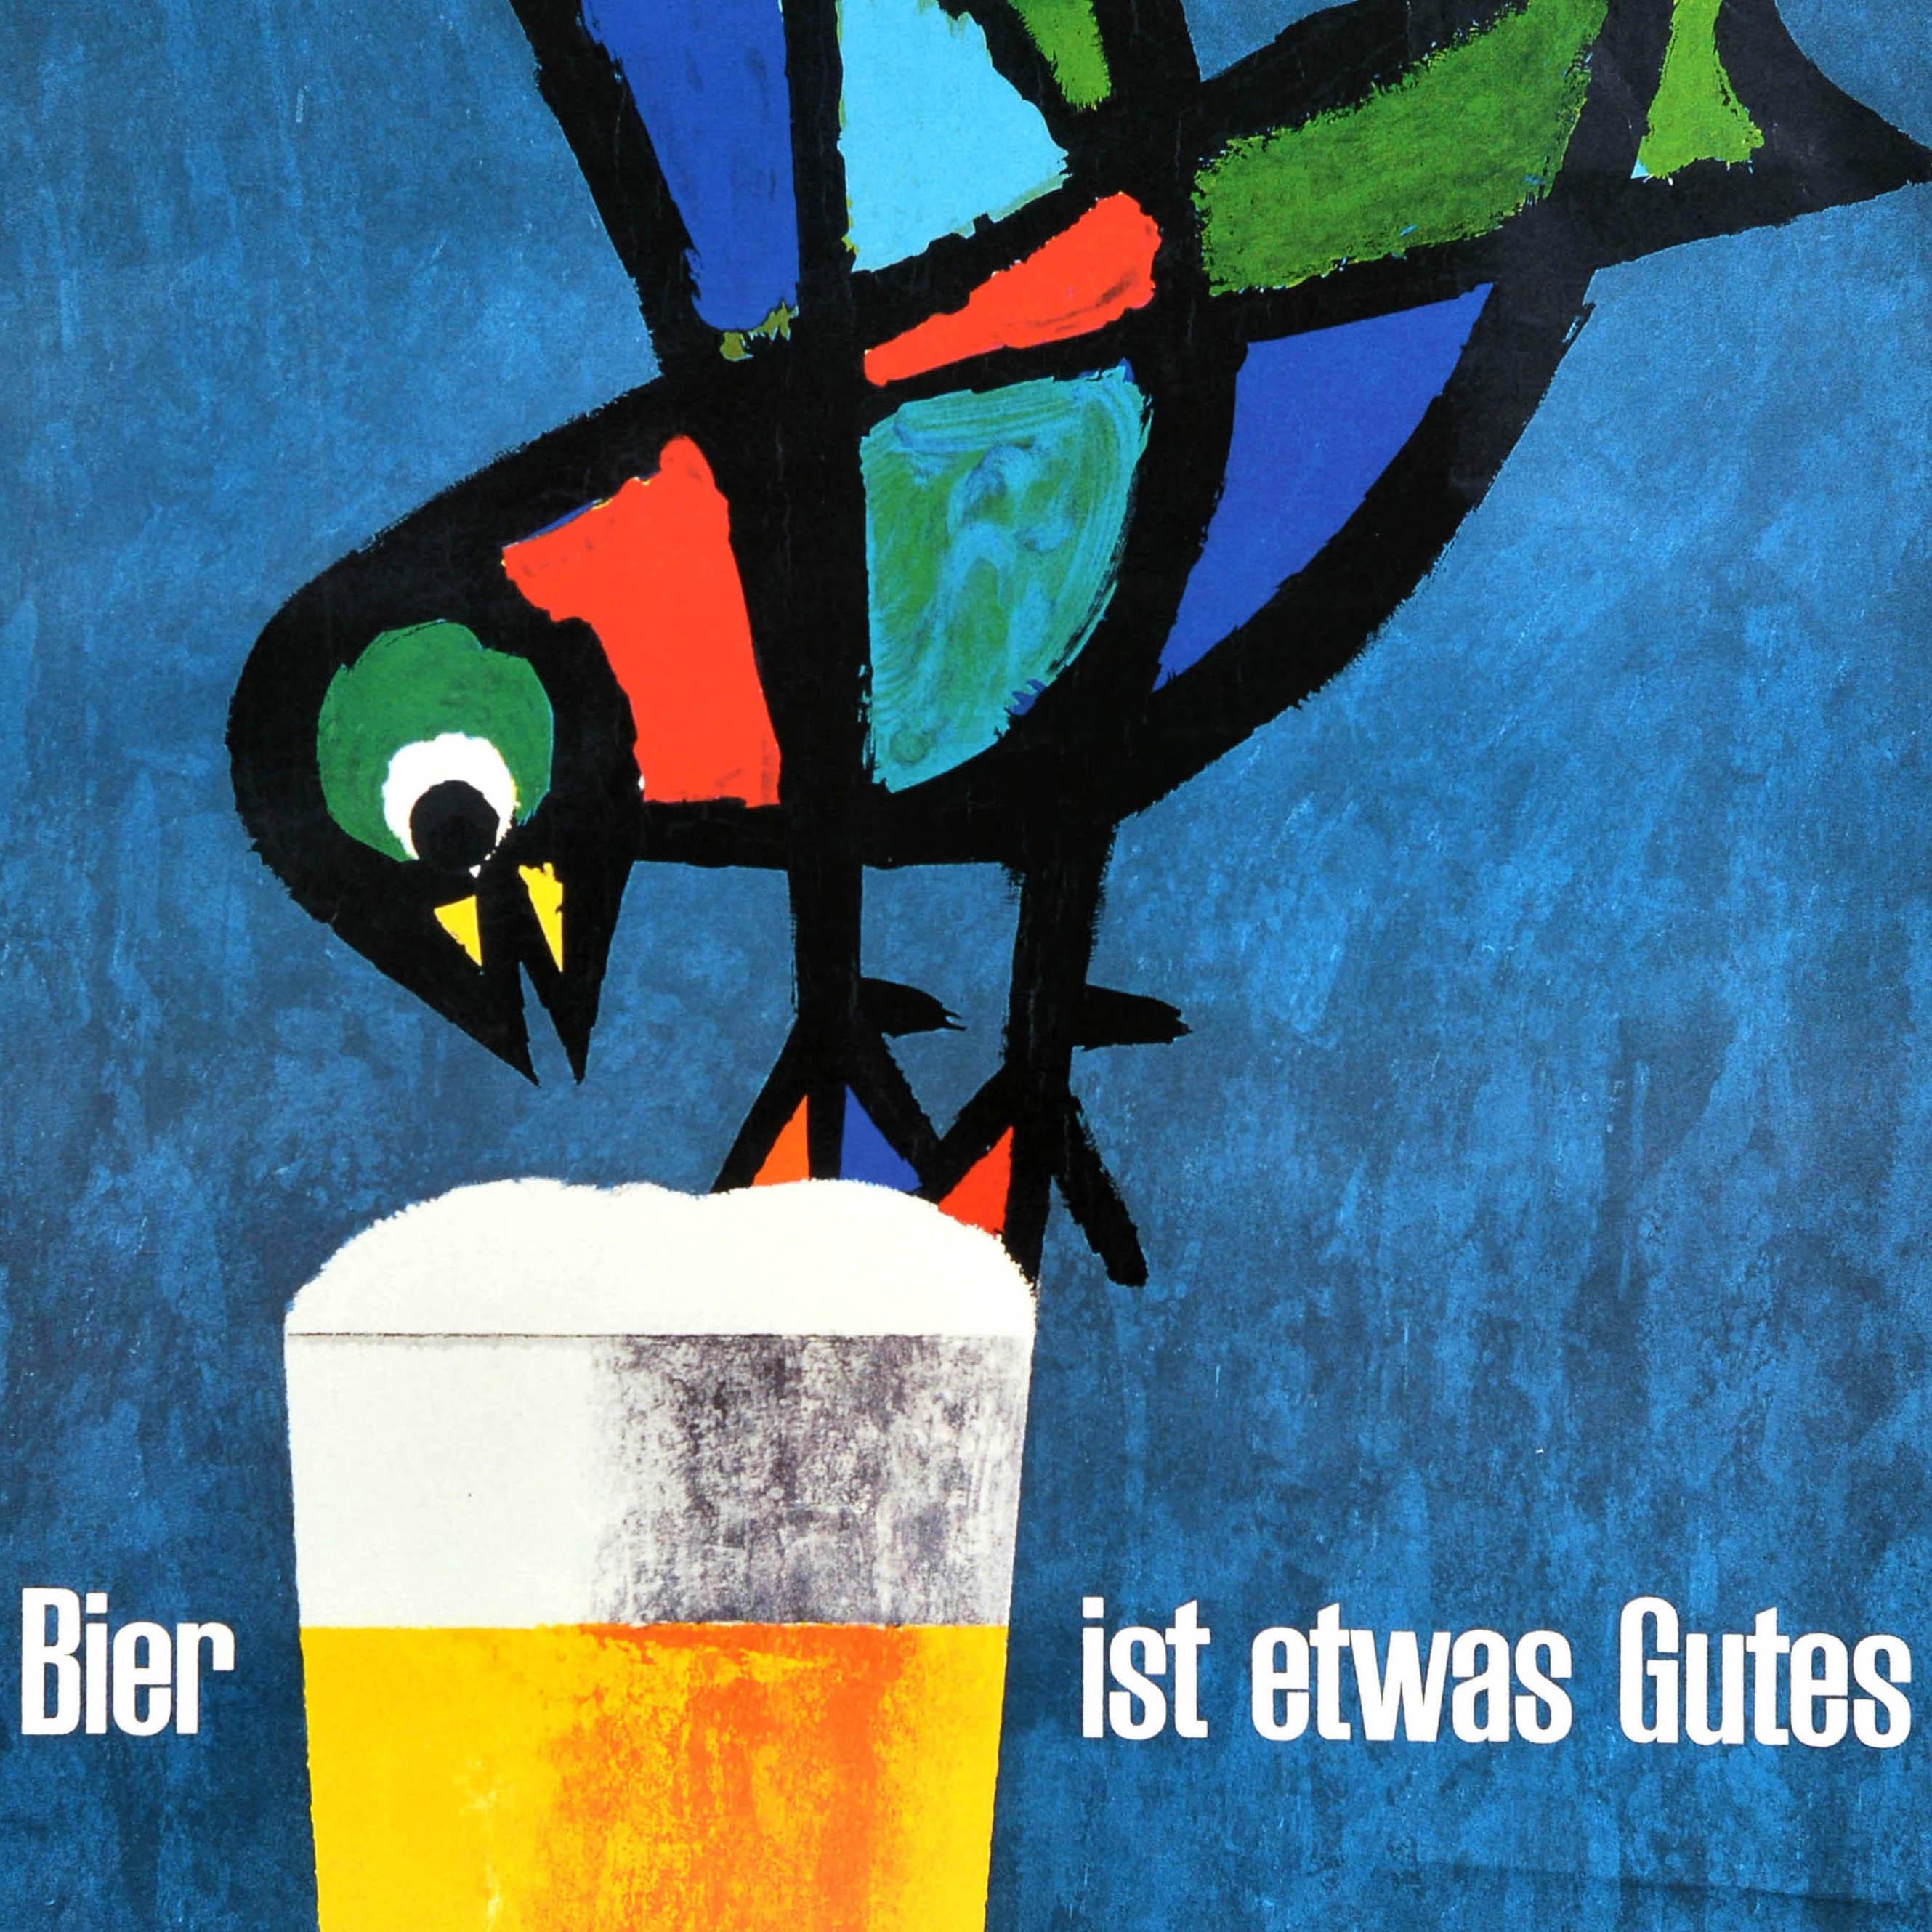 Original Vintage Drink Advertising Poster Beer Is A Good Thing Bird Piatti Bier - Print by Celestino Piatti